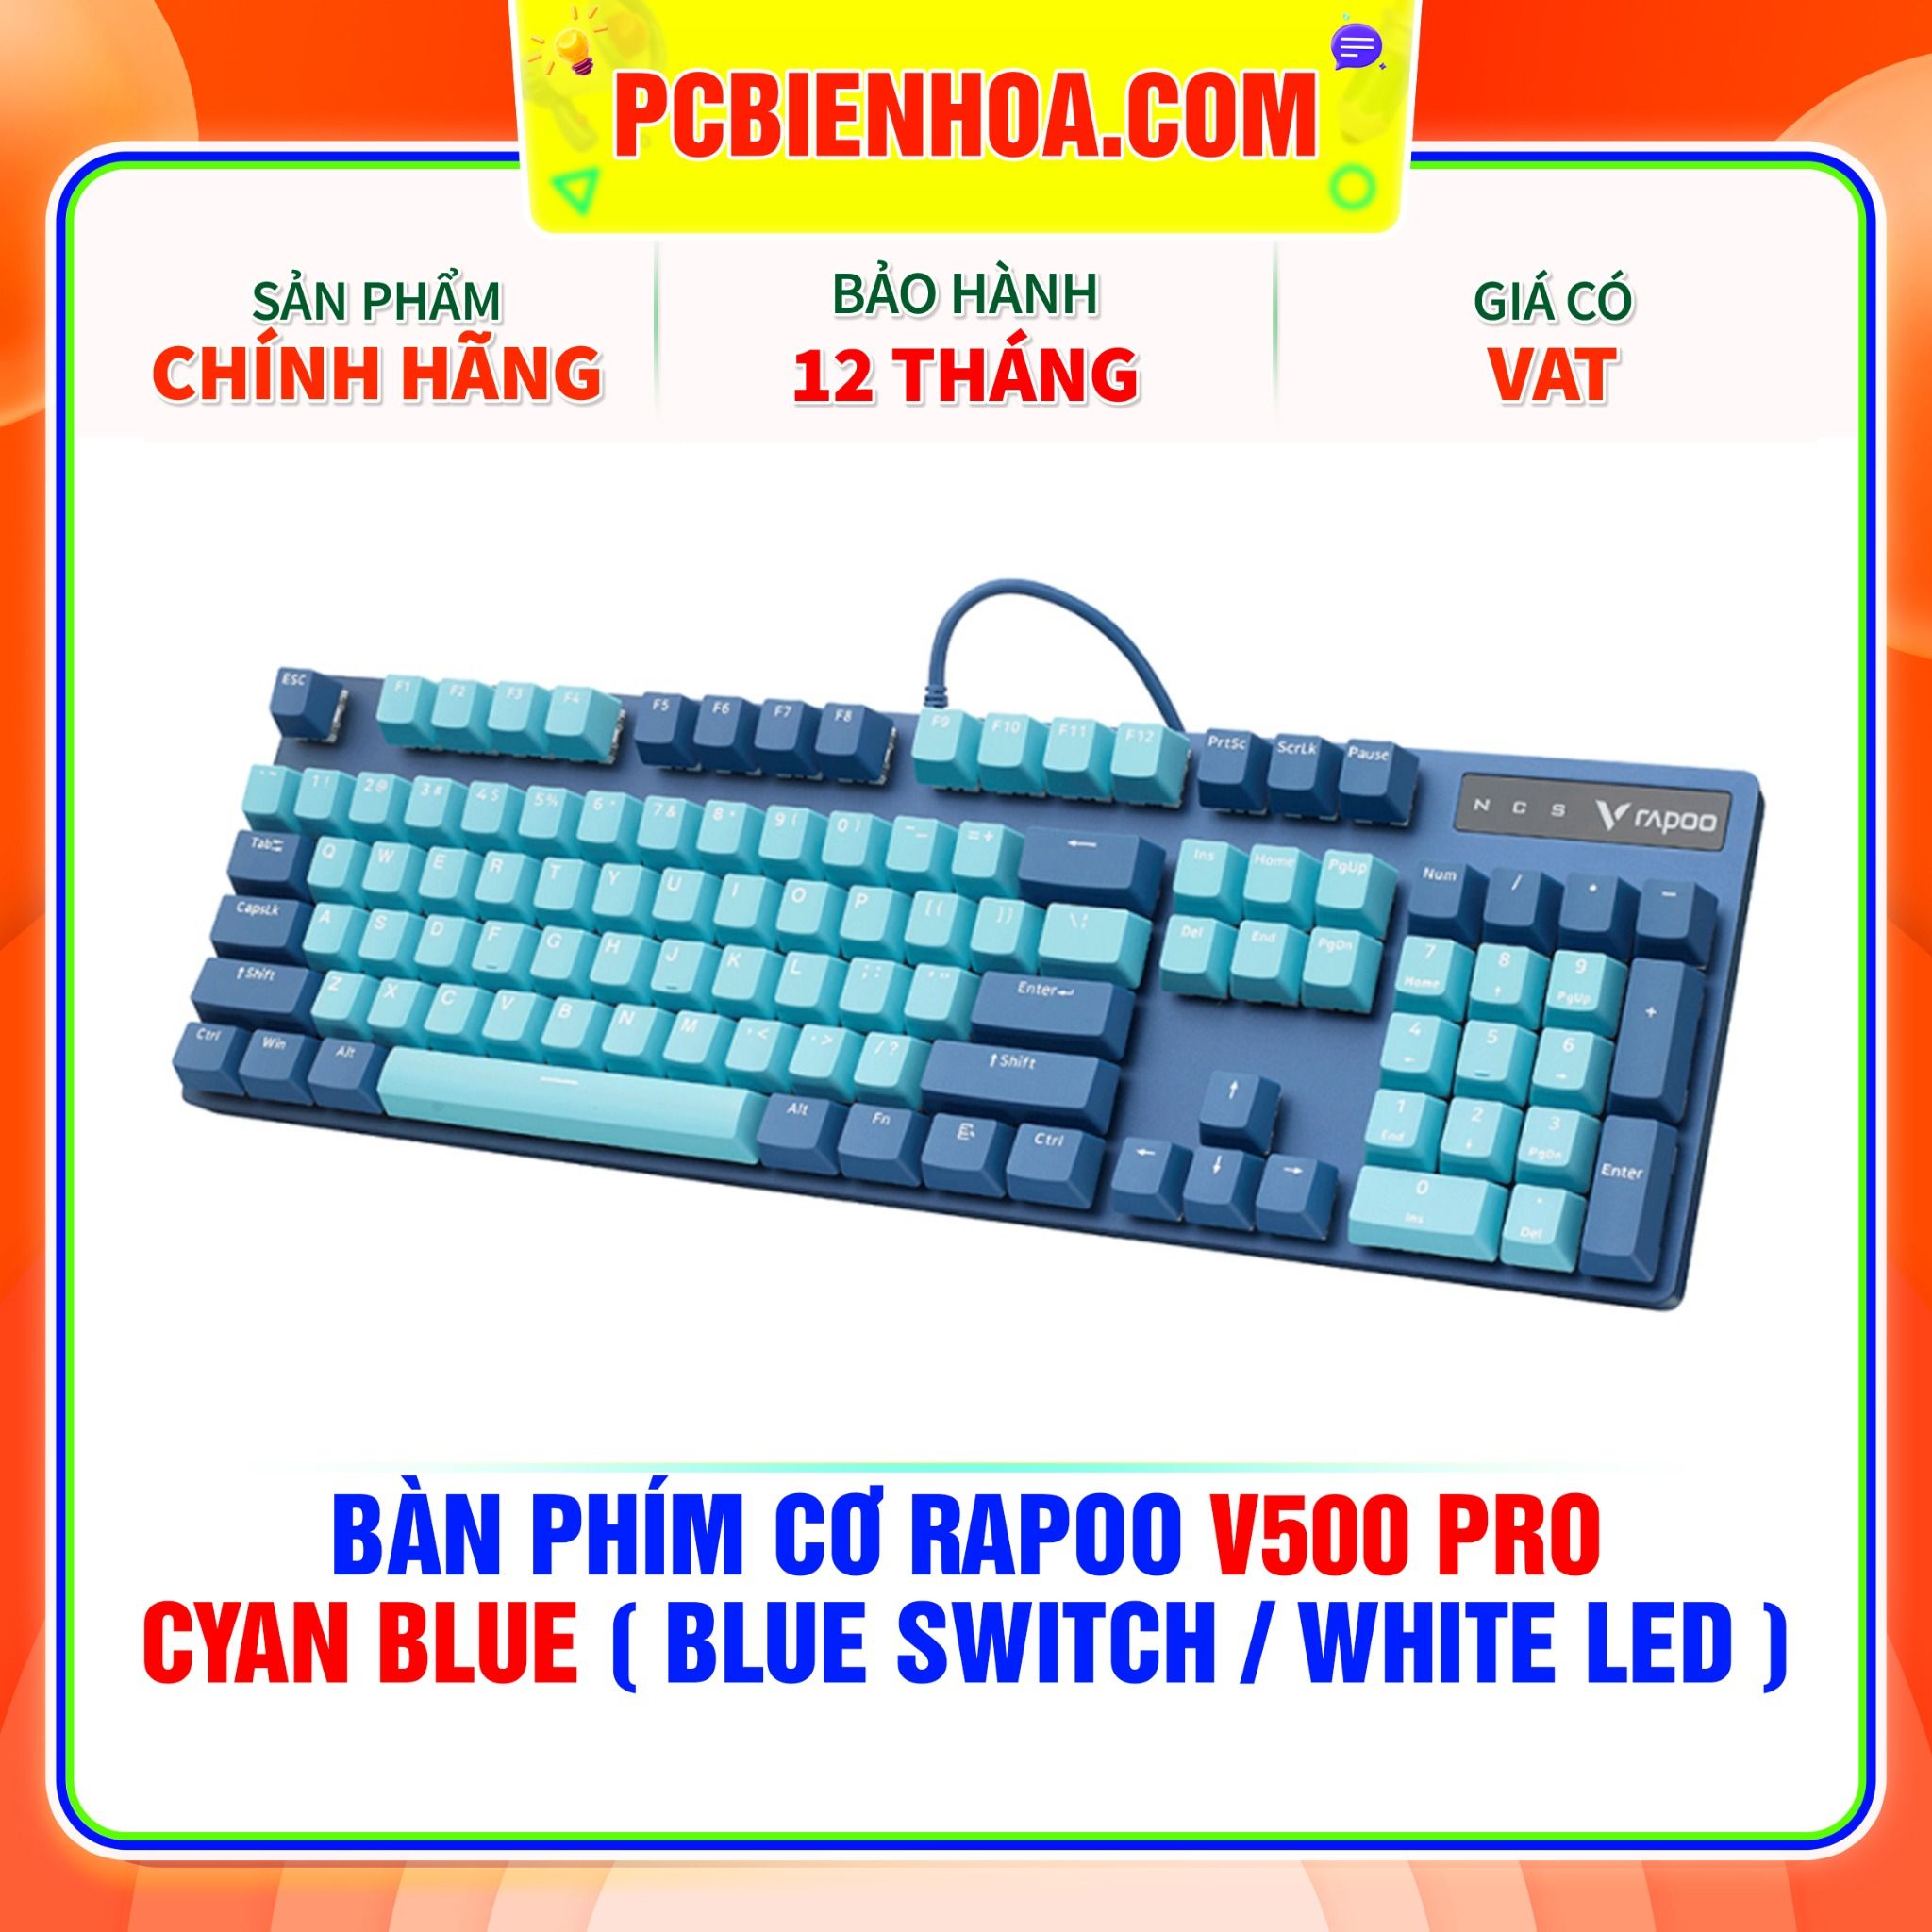  BÀN PHÍM CƠ RAPOO V500 PRO - CYAN BLUE ( BLUE SWITCH / WHITE LED ) 